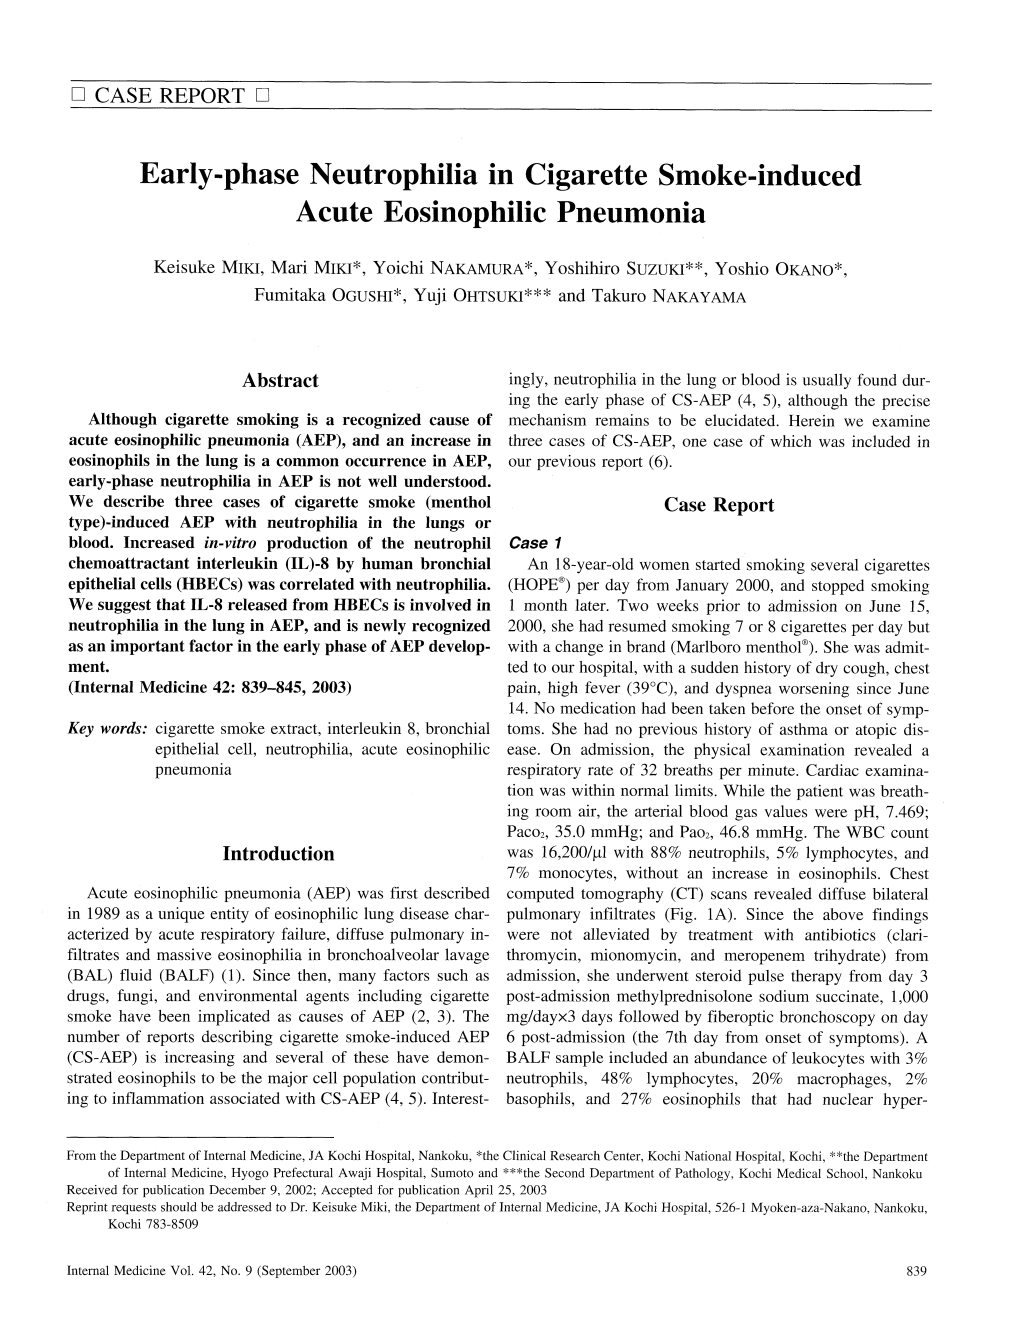 Early-Phase Neutrophilia in Cigarette Smoke-Induced Acute Eosinophilic